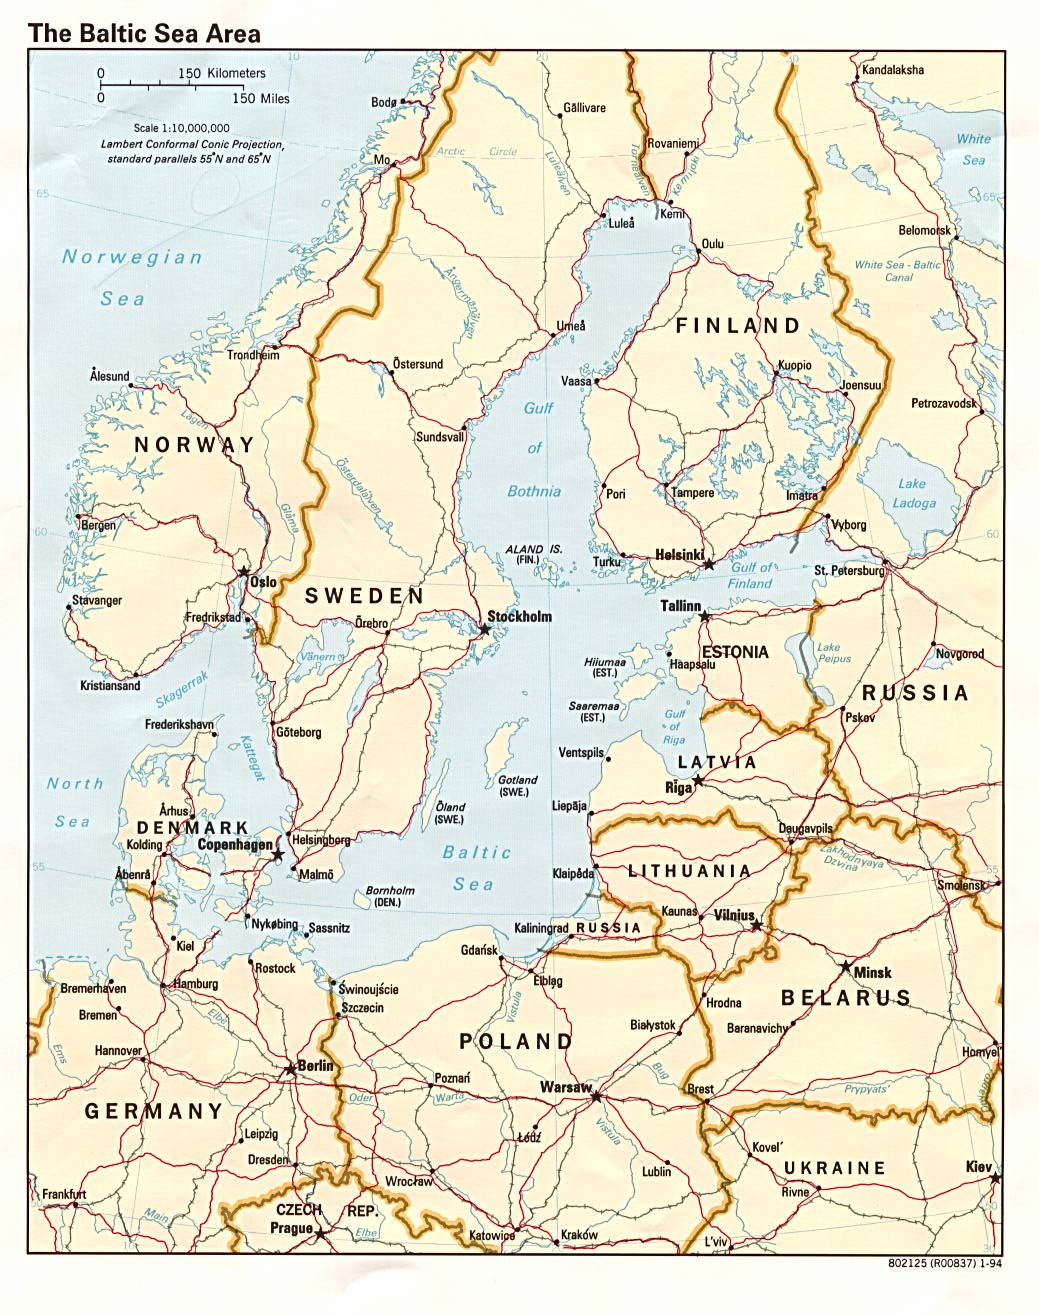 Assessing Baltic Sea Regional Maritime Security